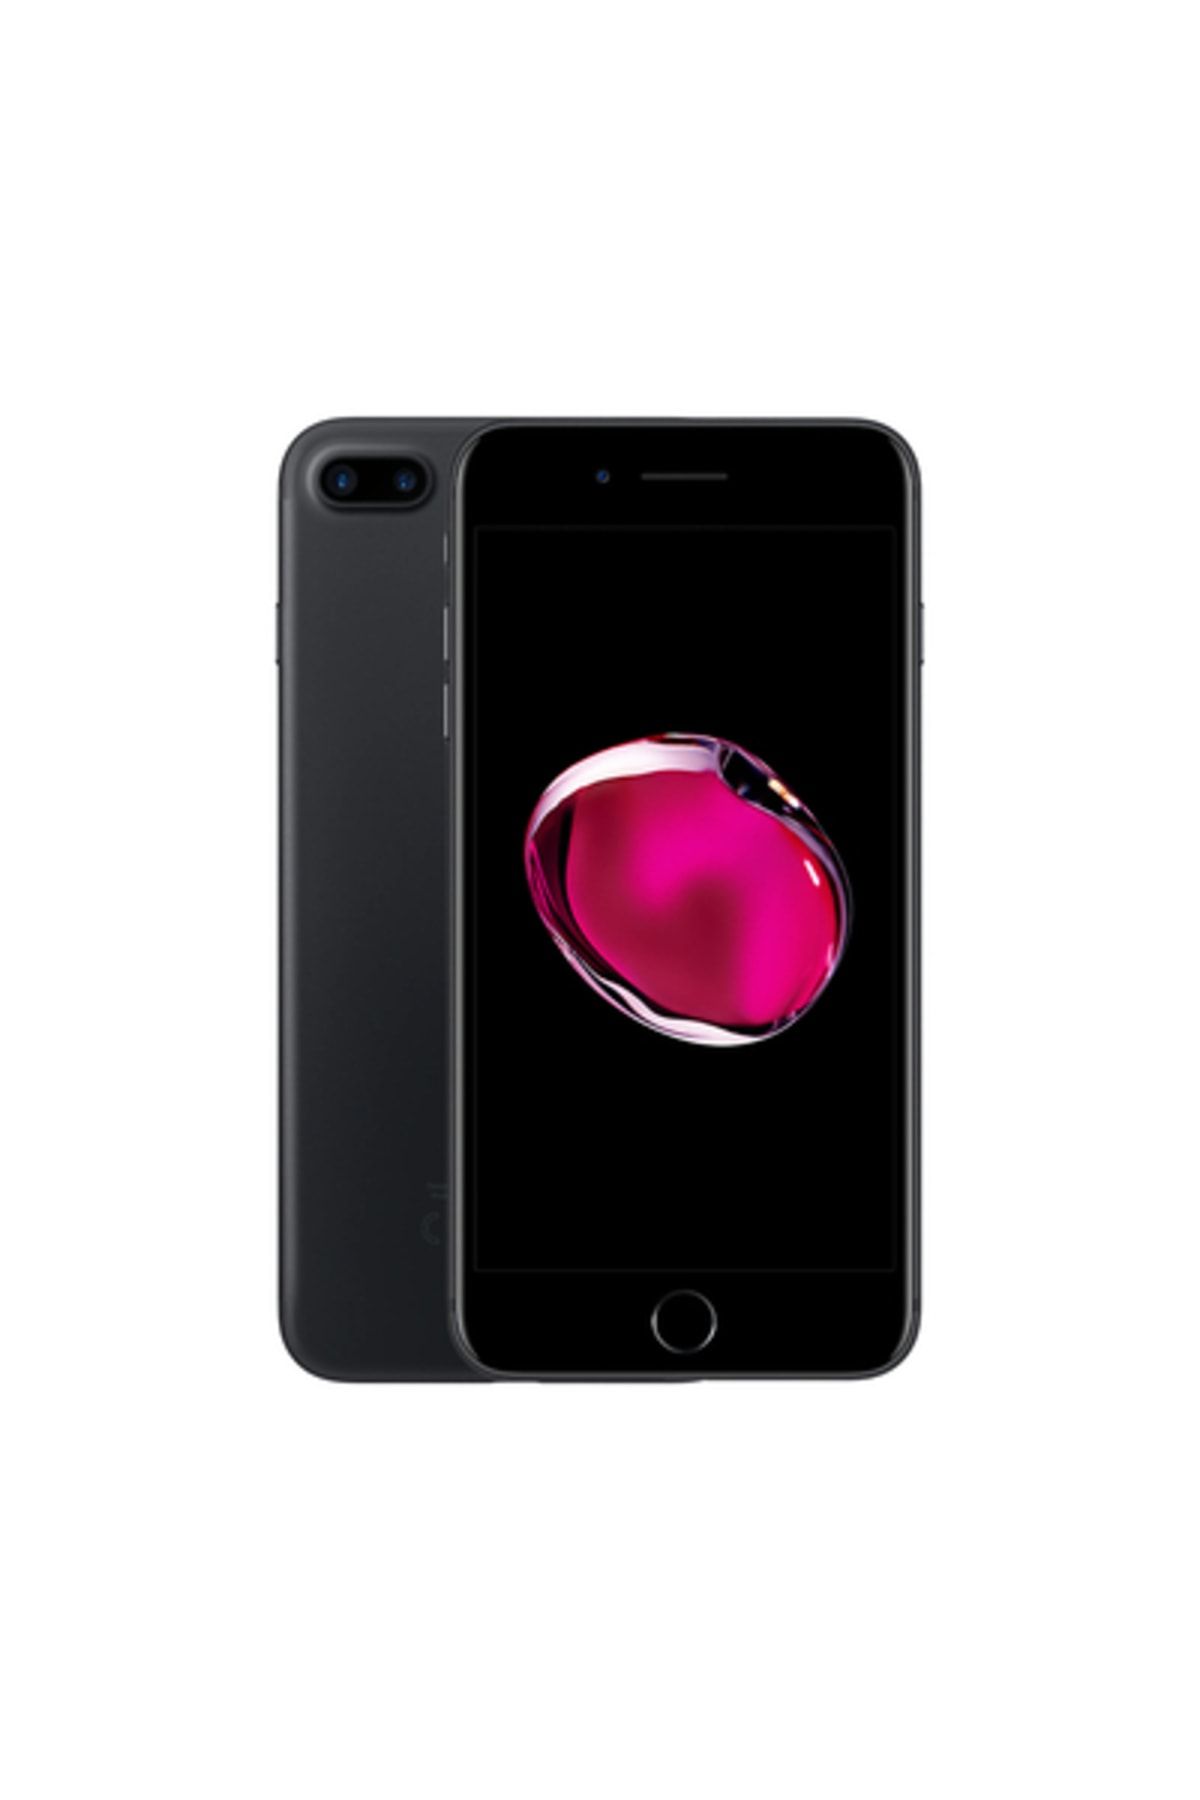 Apple Yenilenmiş iPhone 7 Plus 128 GB Siyah Cep Telefonu (12 Ay Garantili) - A Kalite